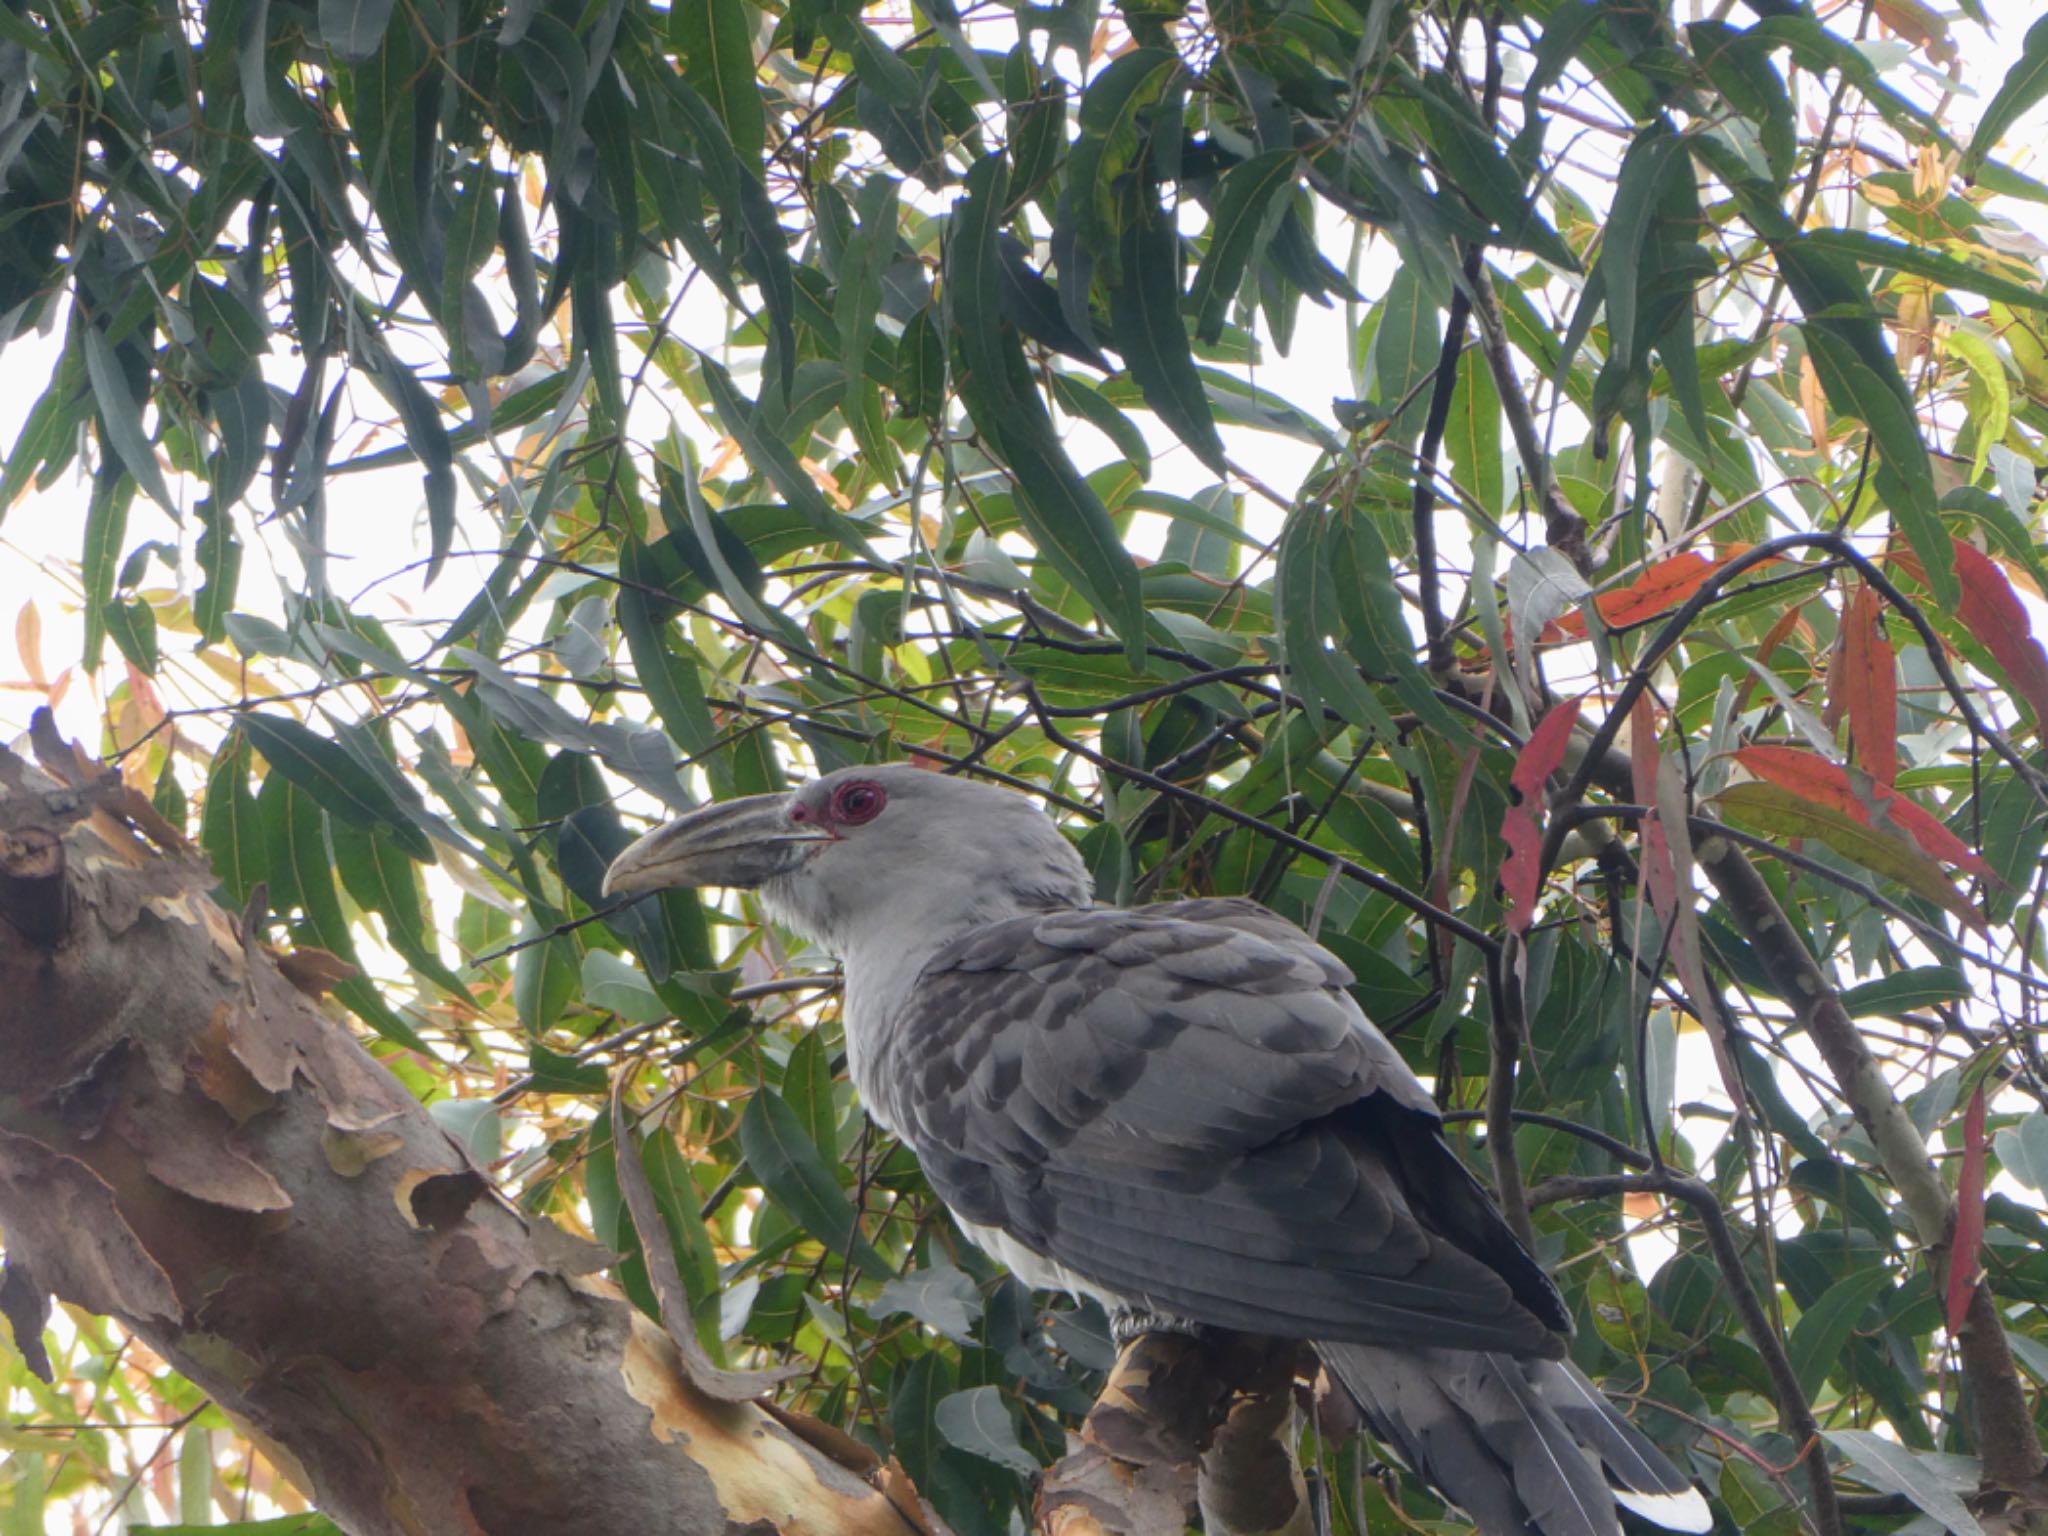 Photo of Channel-billed Cuckoo at Royal Botanic Gardens Sydney by Maki